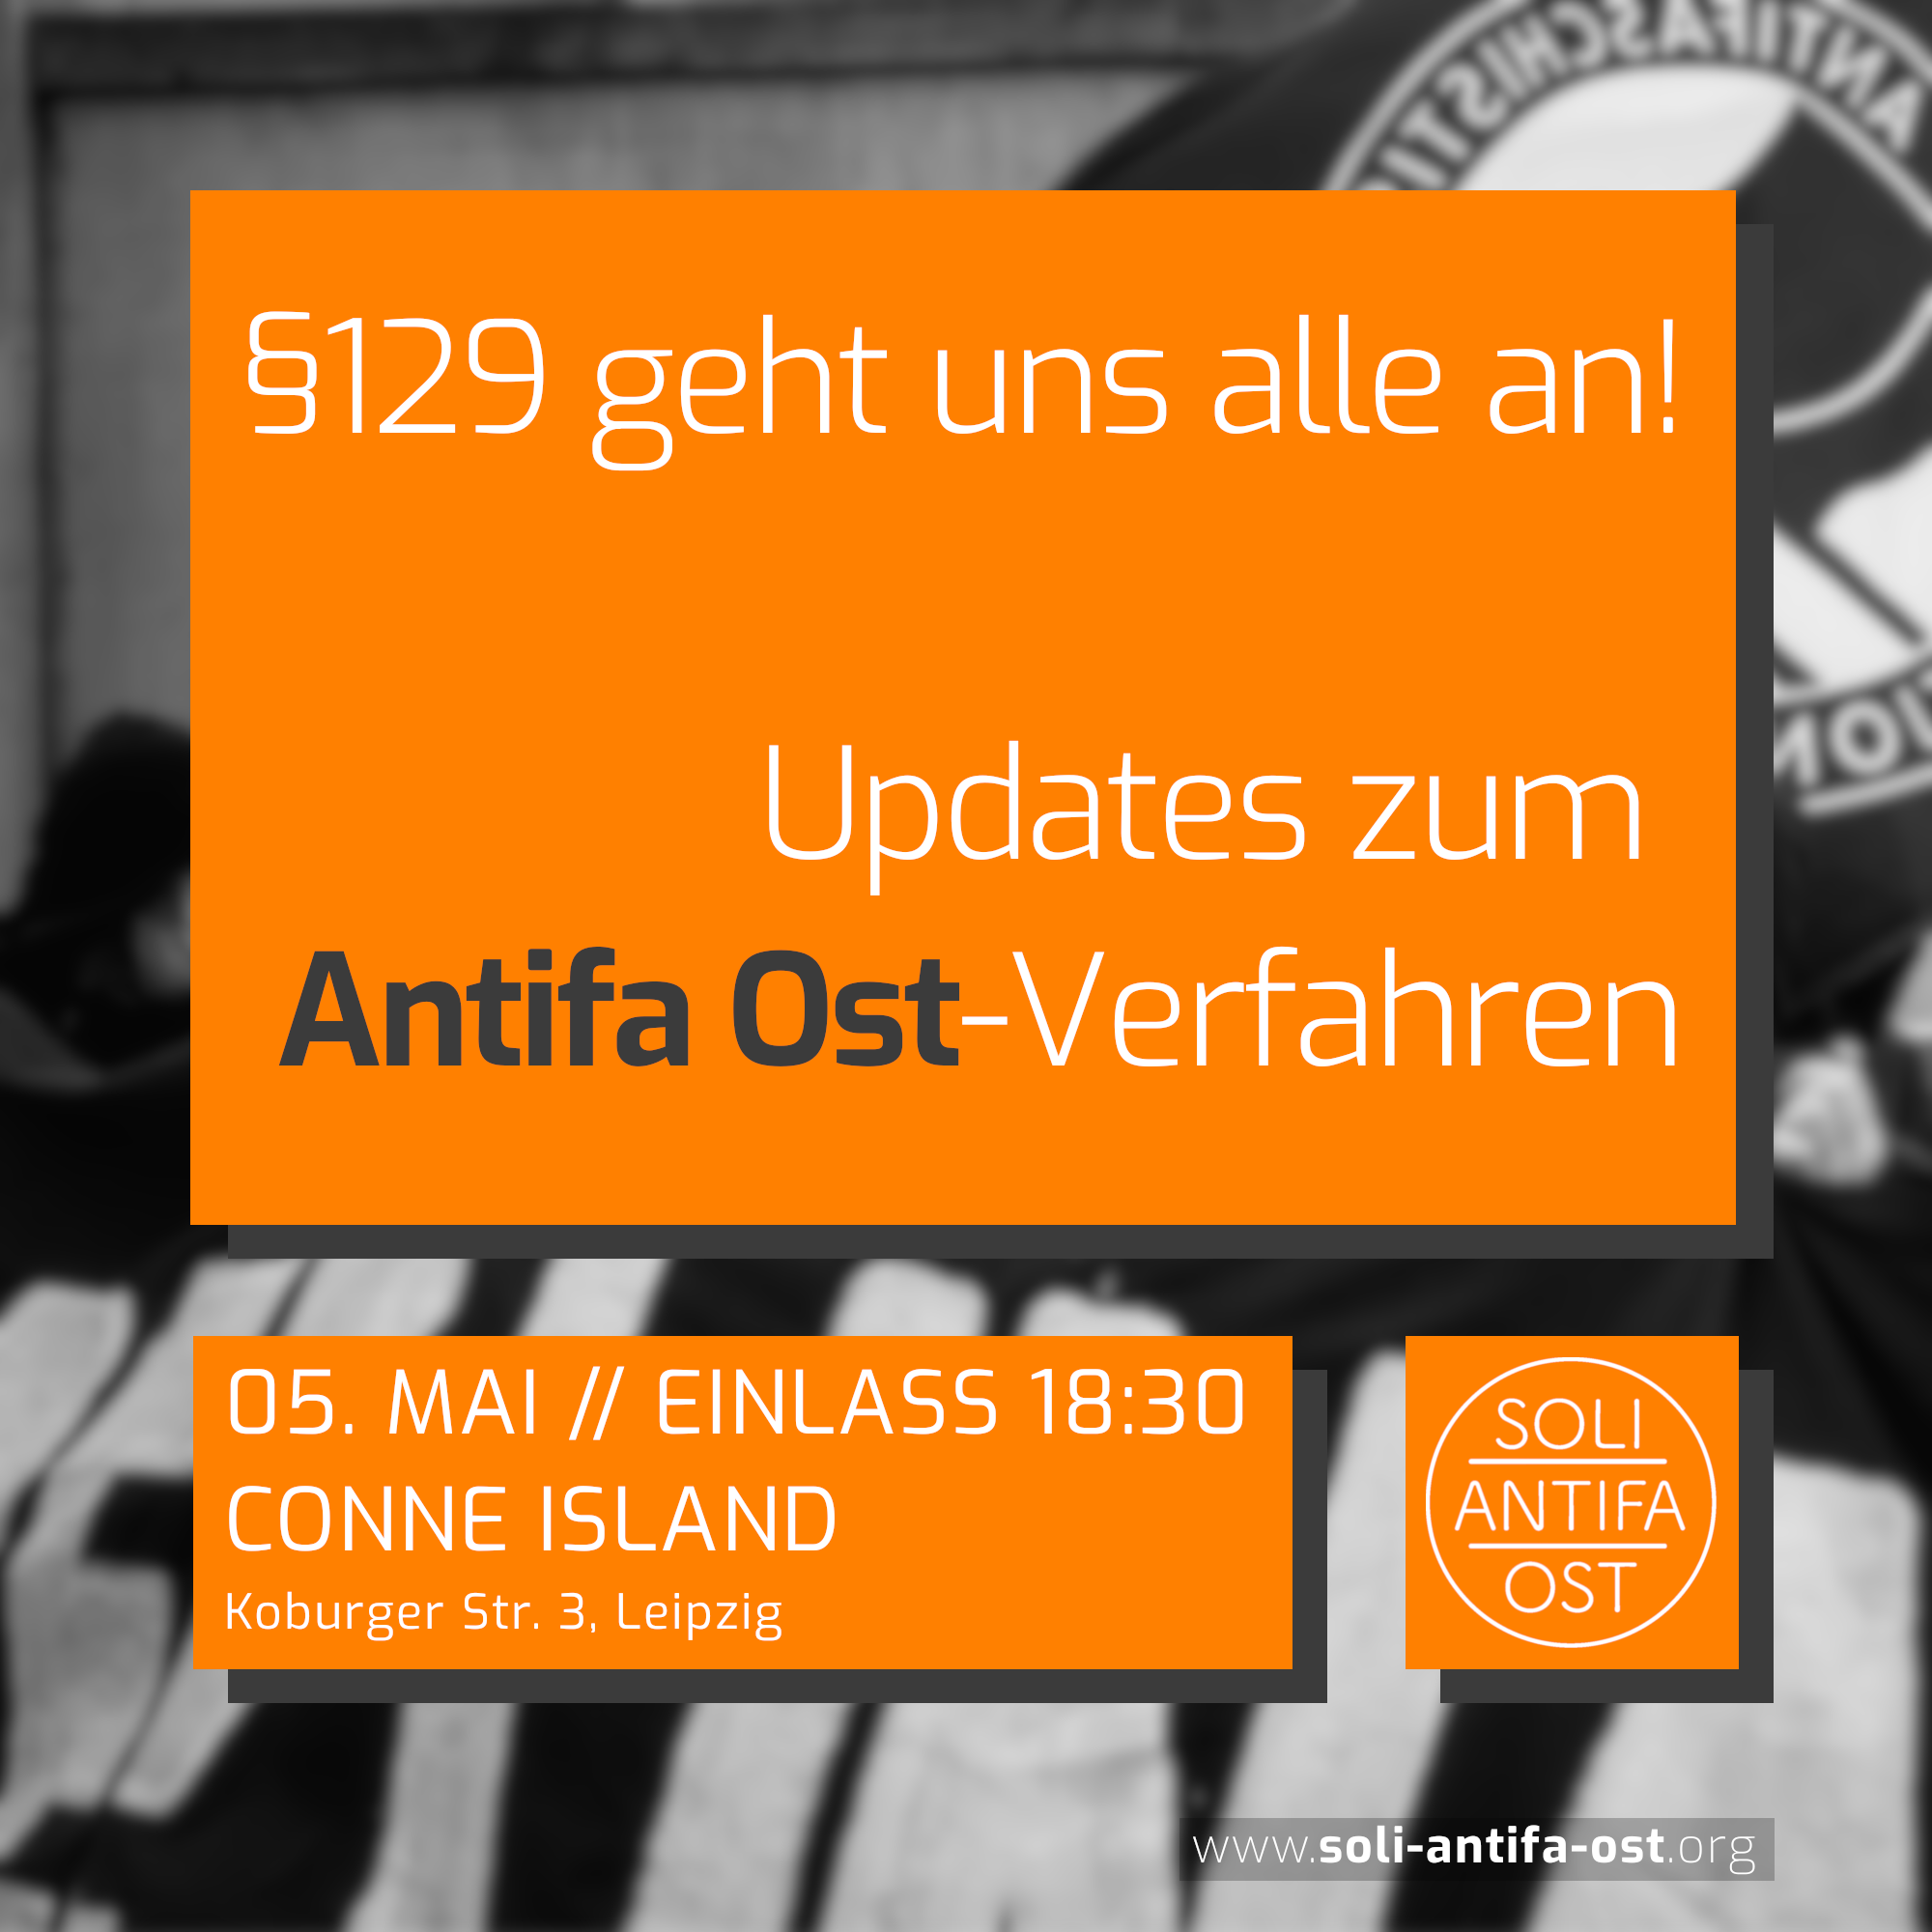 You are currently viewing §129 geht uns alle an! Updates zum Antifa Ost-Verfahren